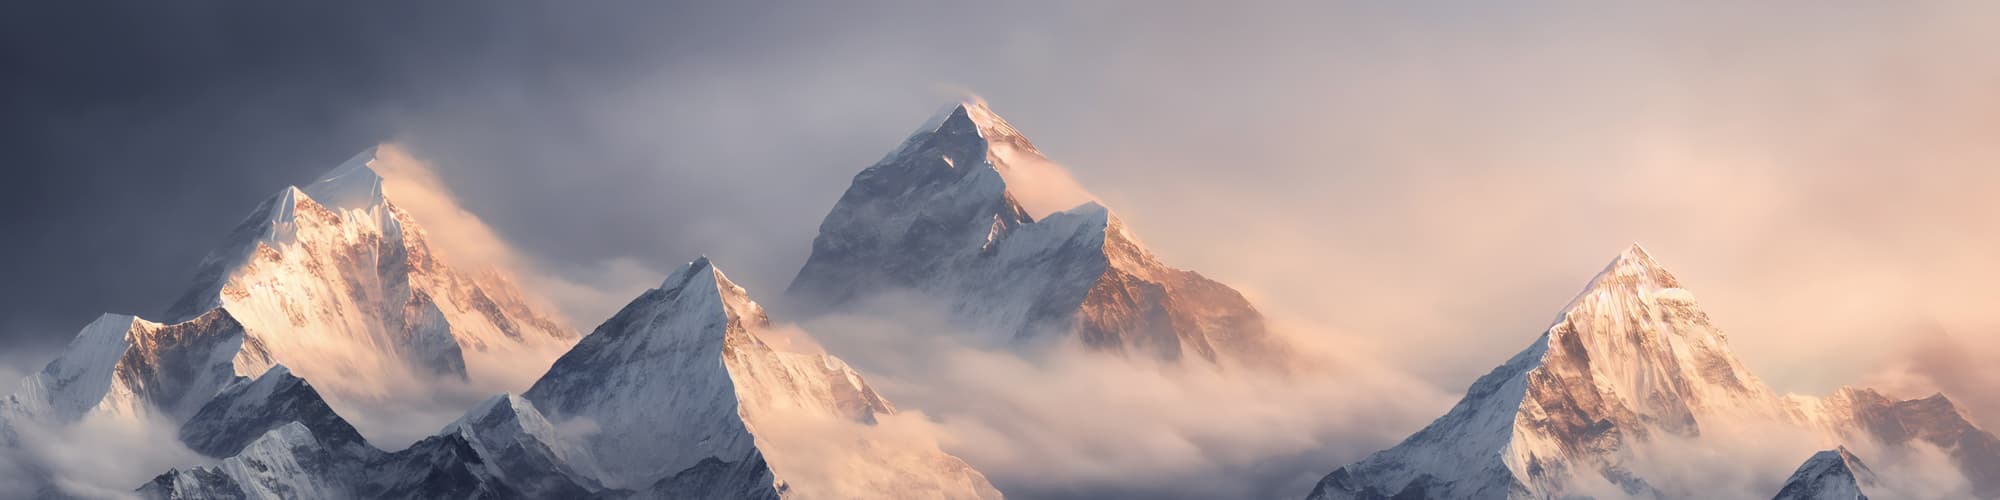 Voyage en groupe Everest © Josh / Adobe Stock